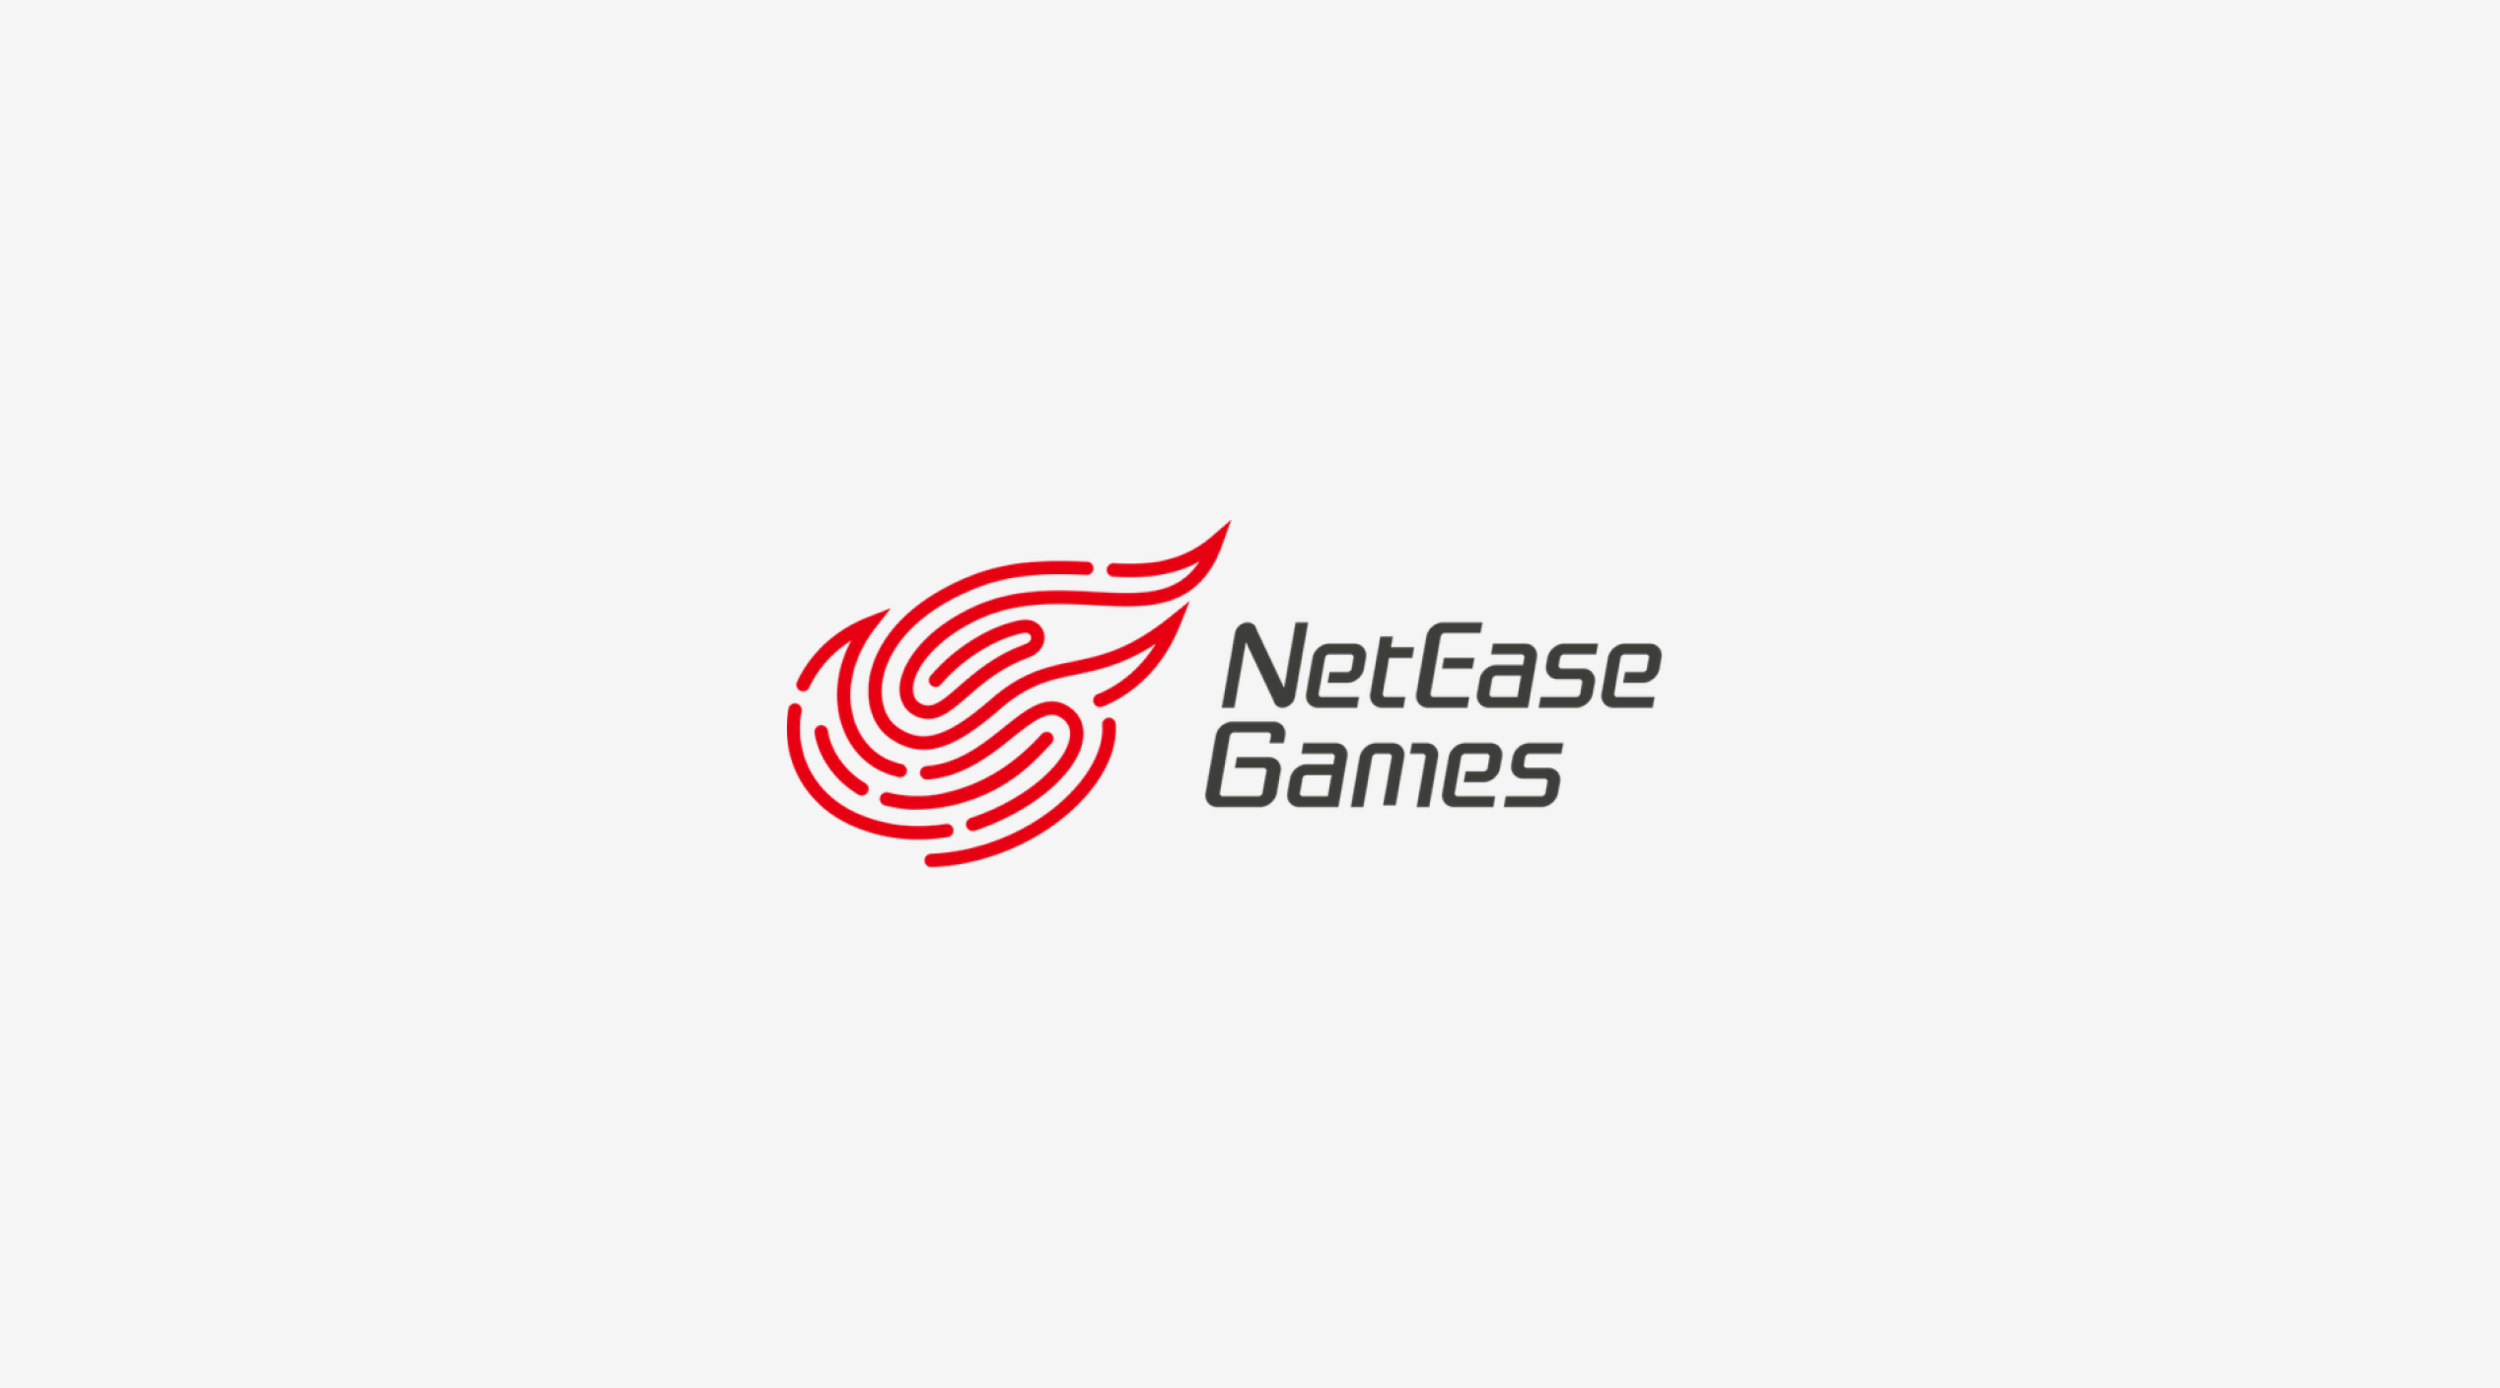 Провода ardor gaming. NETEASE games. NETEASE офис. NETEASE logo. Ardor Gaming логотип.